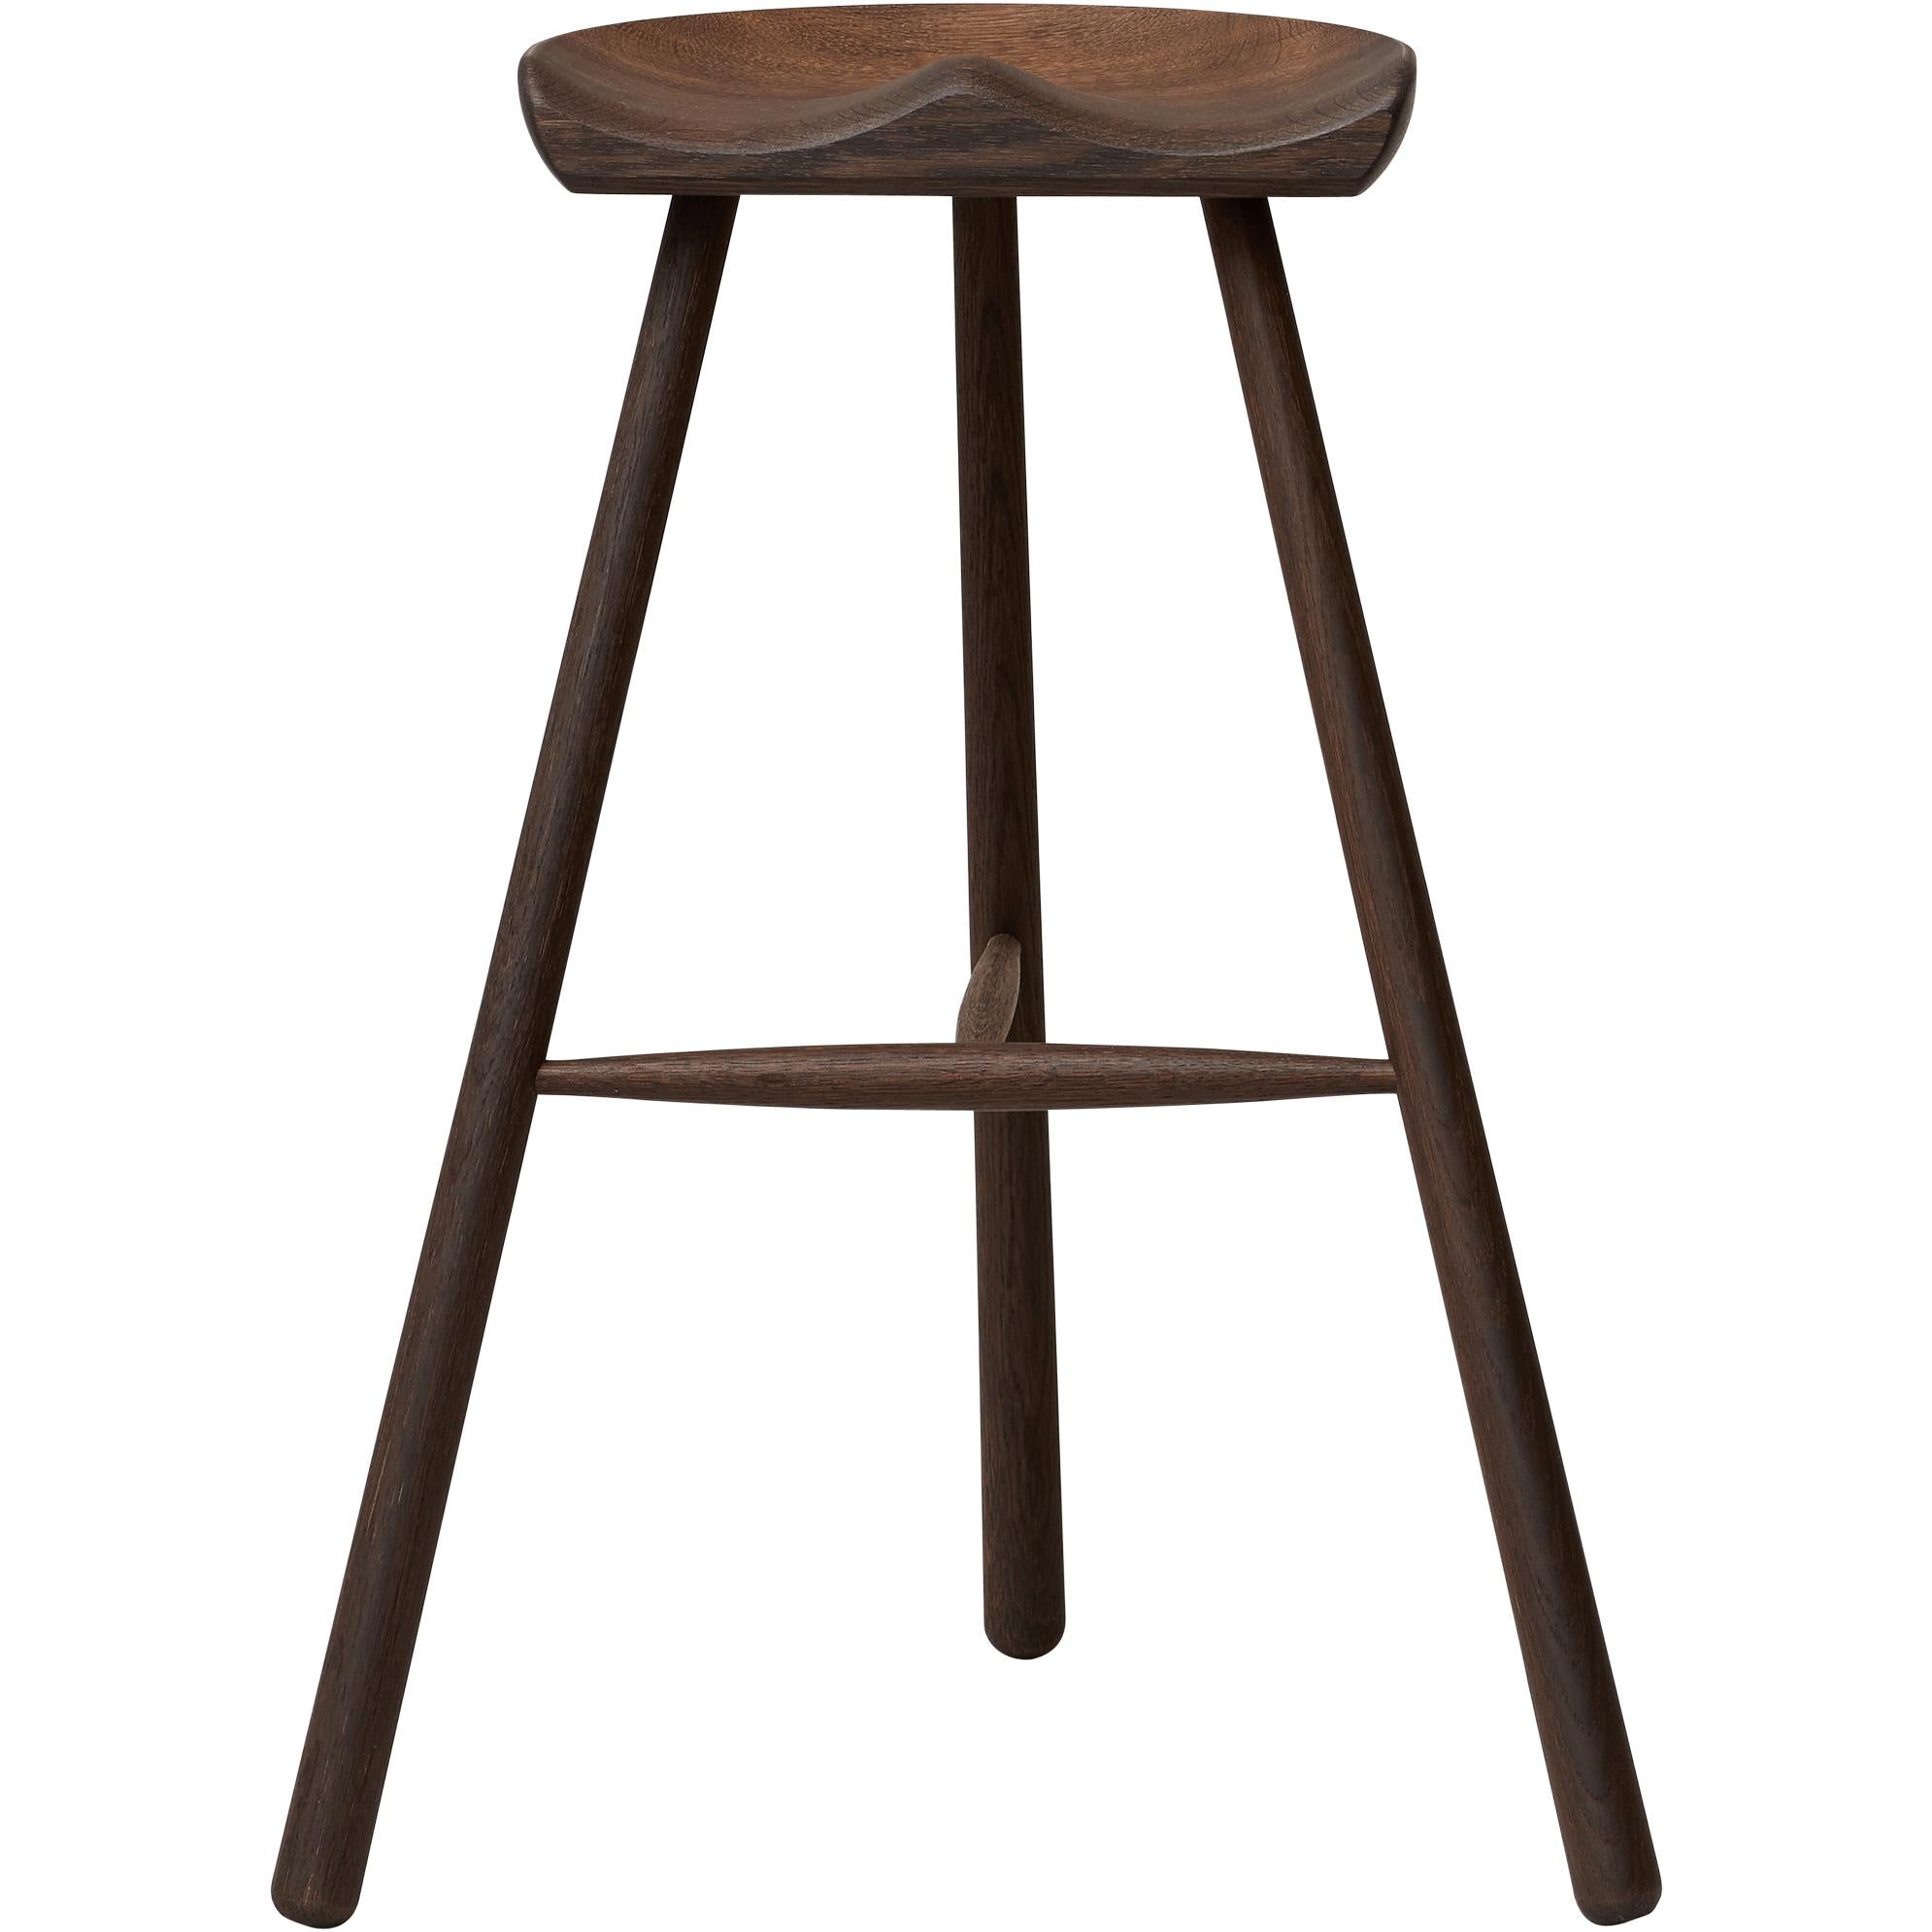 Form & Refine Shoemaker Chair No. 78. Smoked Oak